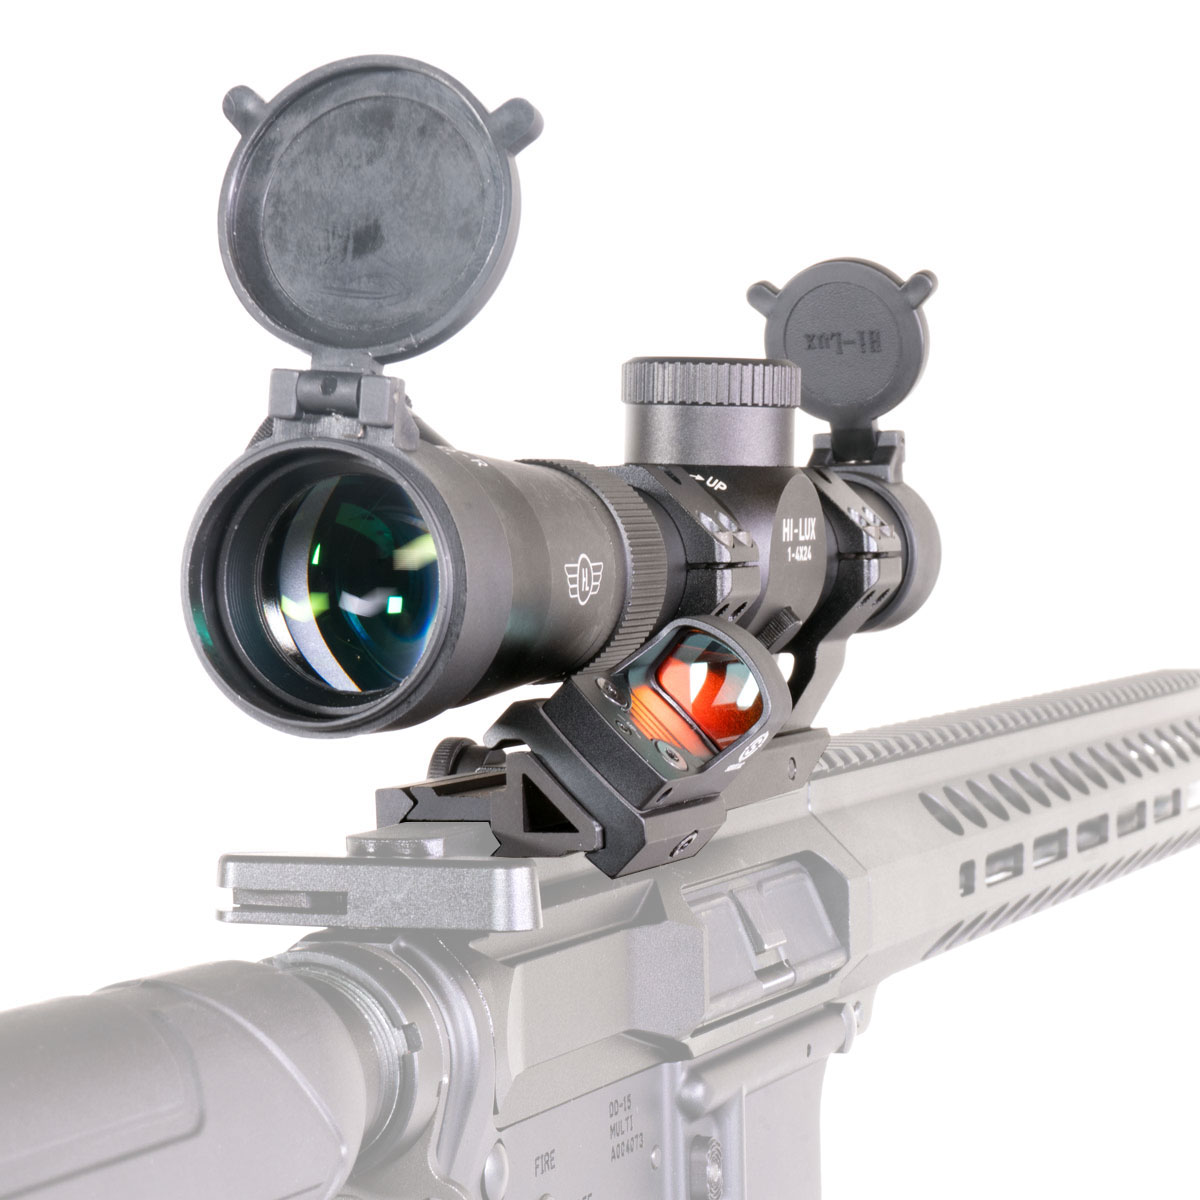 Range Loadout: CMR4 1-4X24 LPVO Rifle Scope + Single Piece Optic Mount + NcSTAR 45-Degree Off-Set Rail Mount + Compact Pistol Red Dot Sight